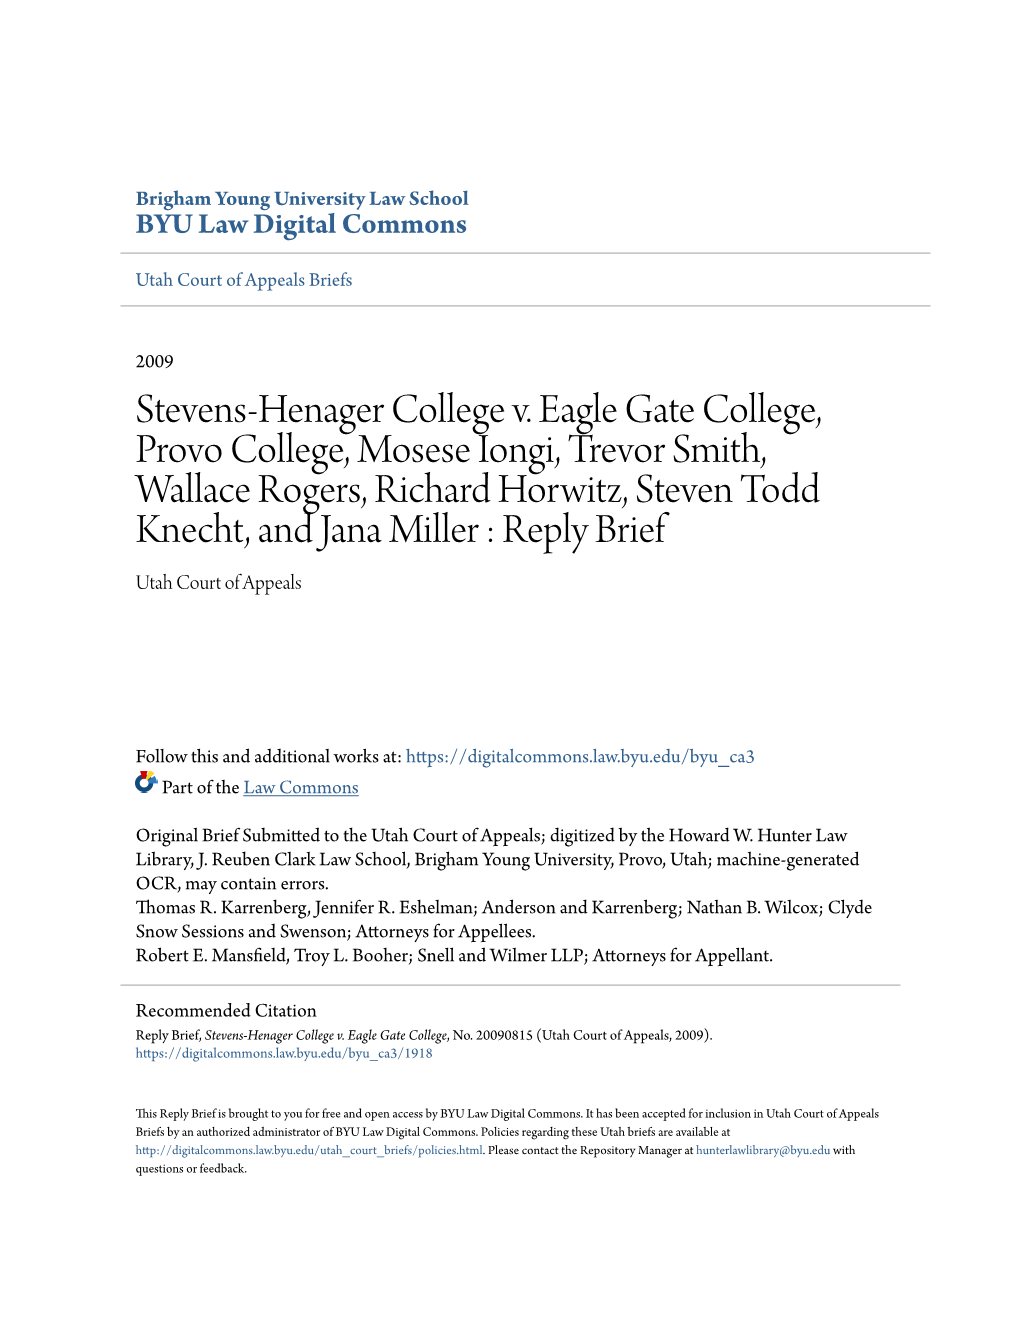 Stevens-Henager College V. Eagle Gate College, Provo College